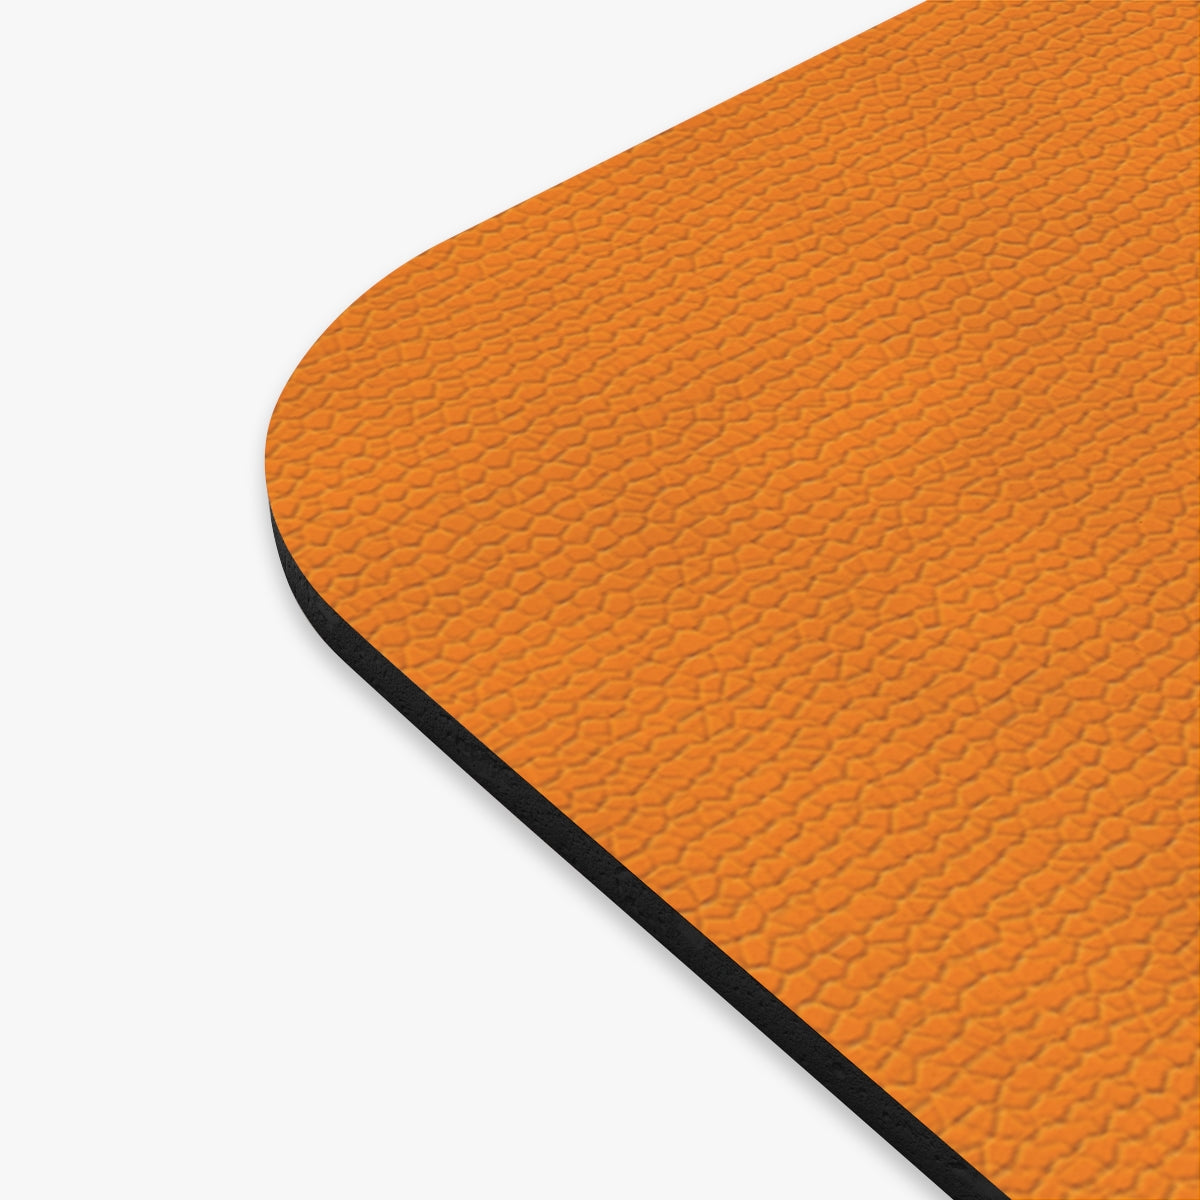 Orange Leather Print Rectangle Mouse Pad